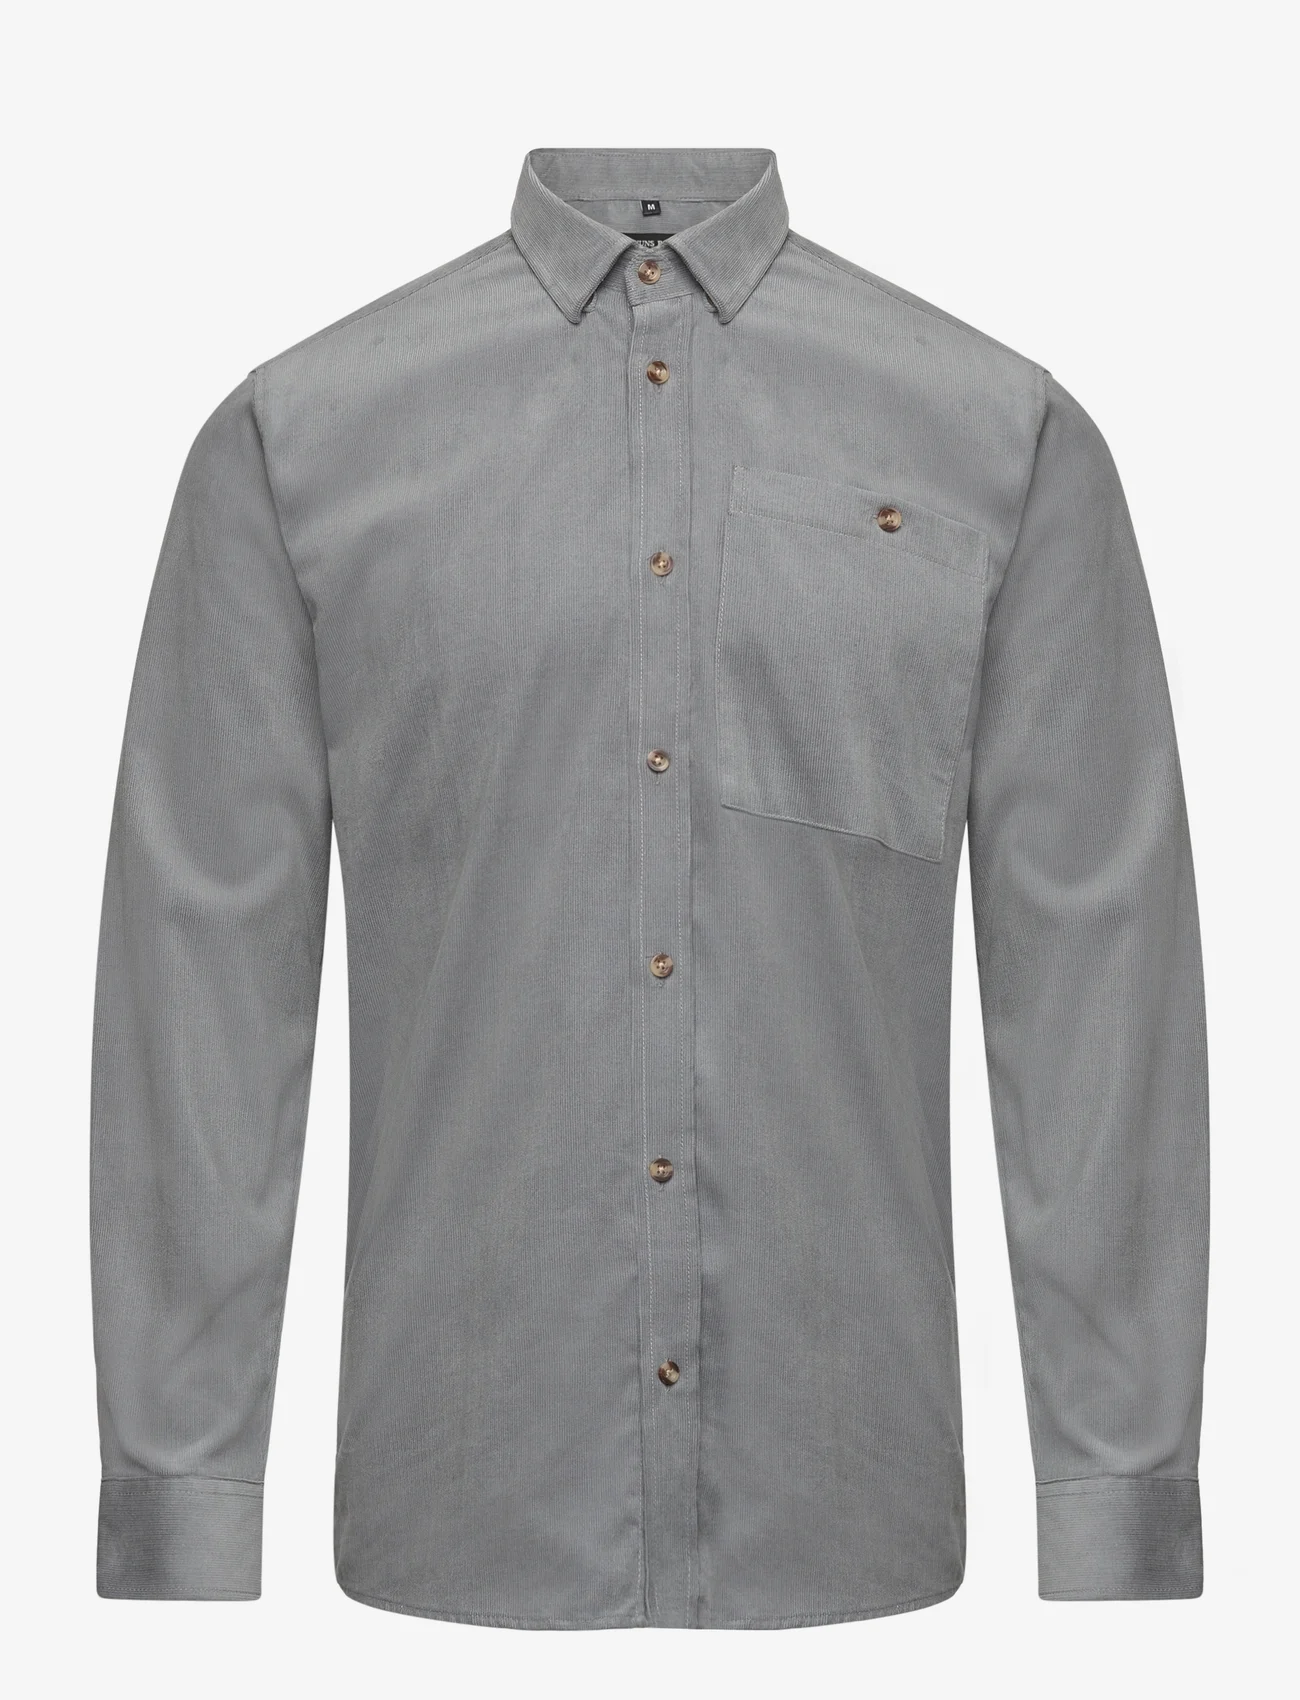 Bruuns Bazaar - CordBBStoke shirt - fløjlsskjorter - light grey - 0